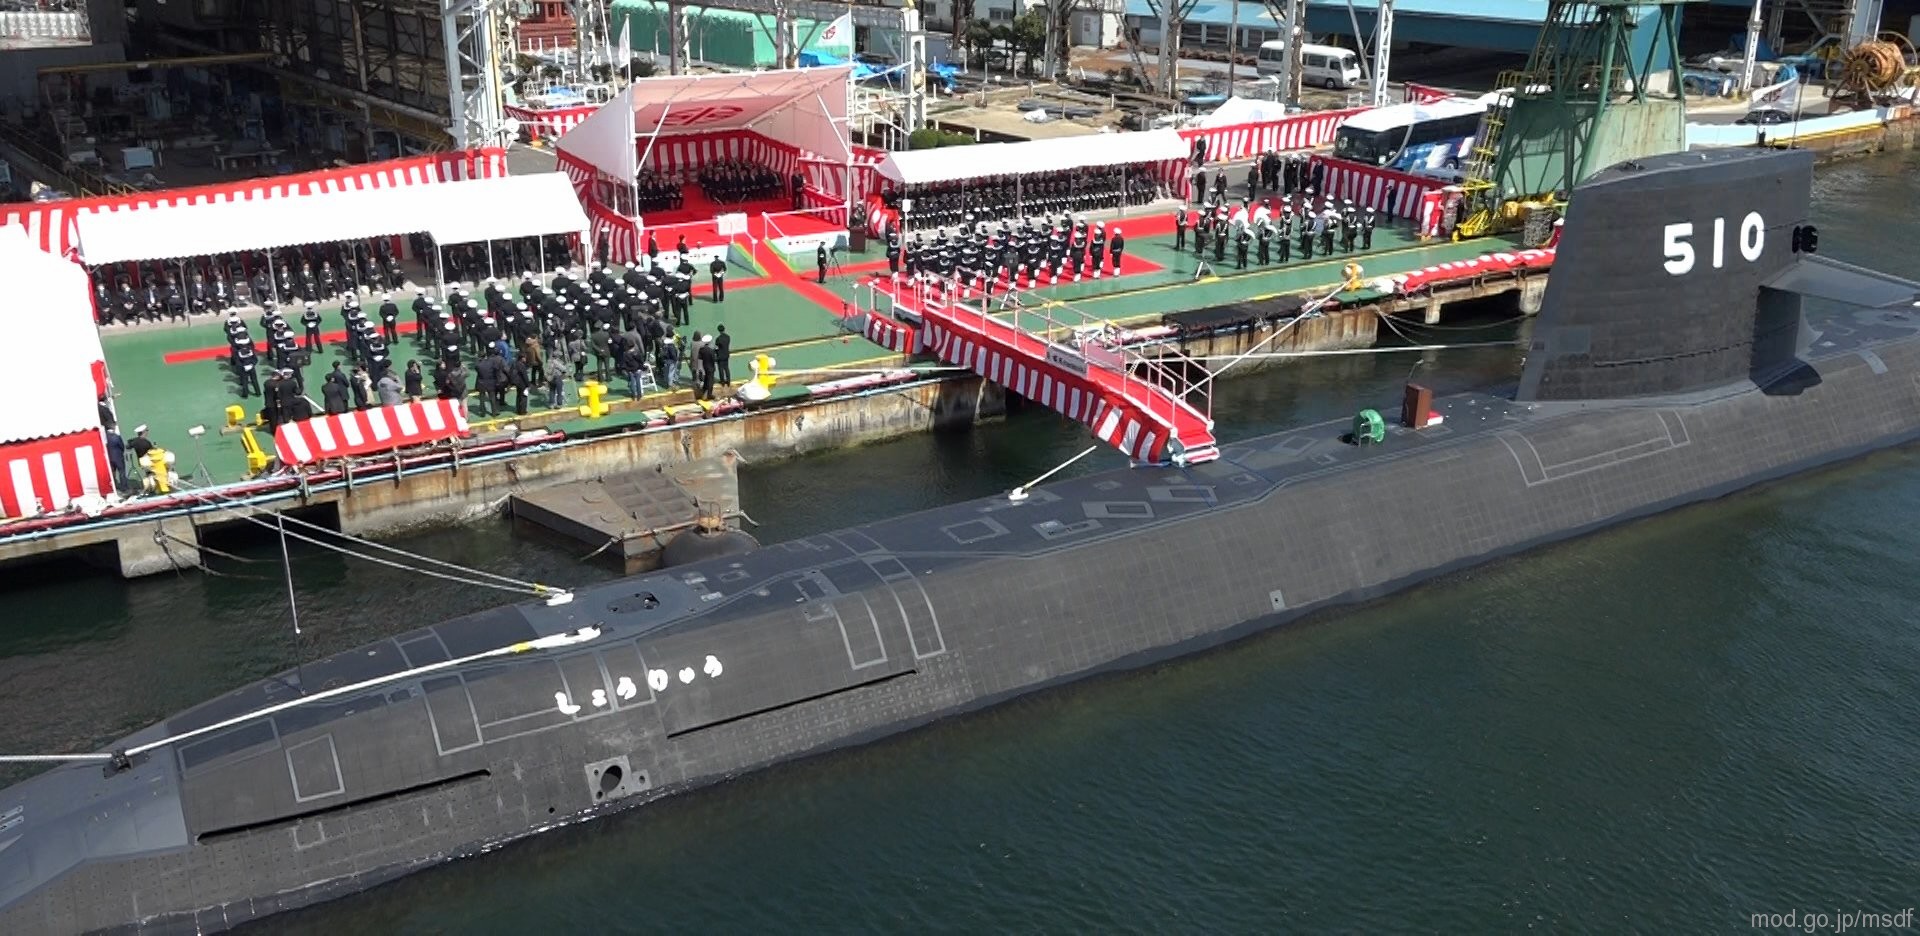 ss-510 js shoryu 16ss soryu class attack submarine ssk japan maritime self defense force jmsdf 08